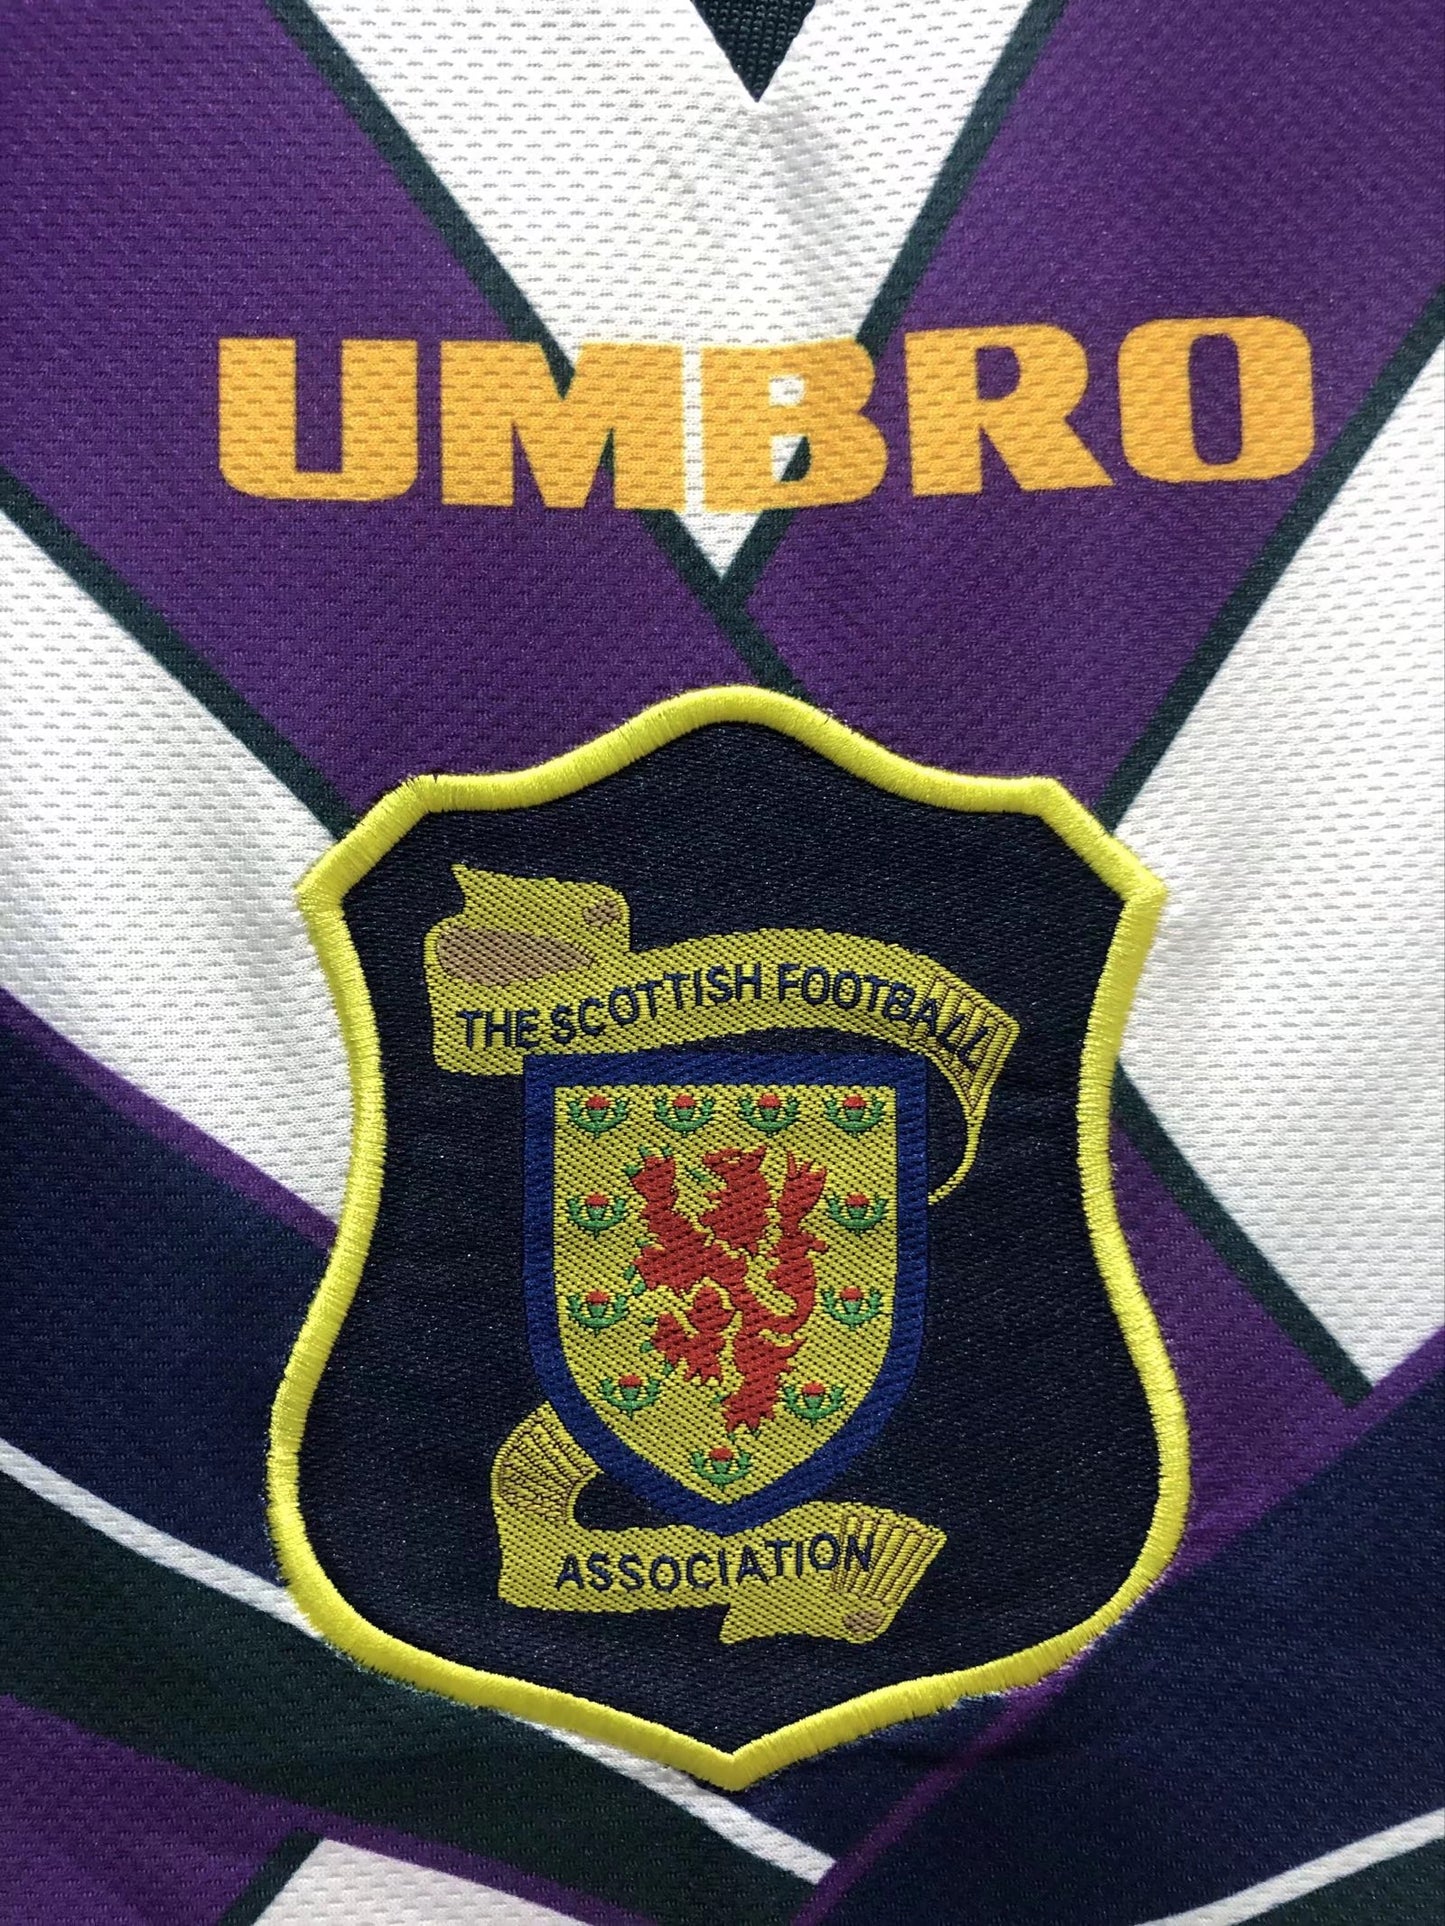 Scotland 1994 Away Shirt